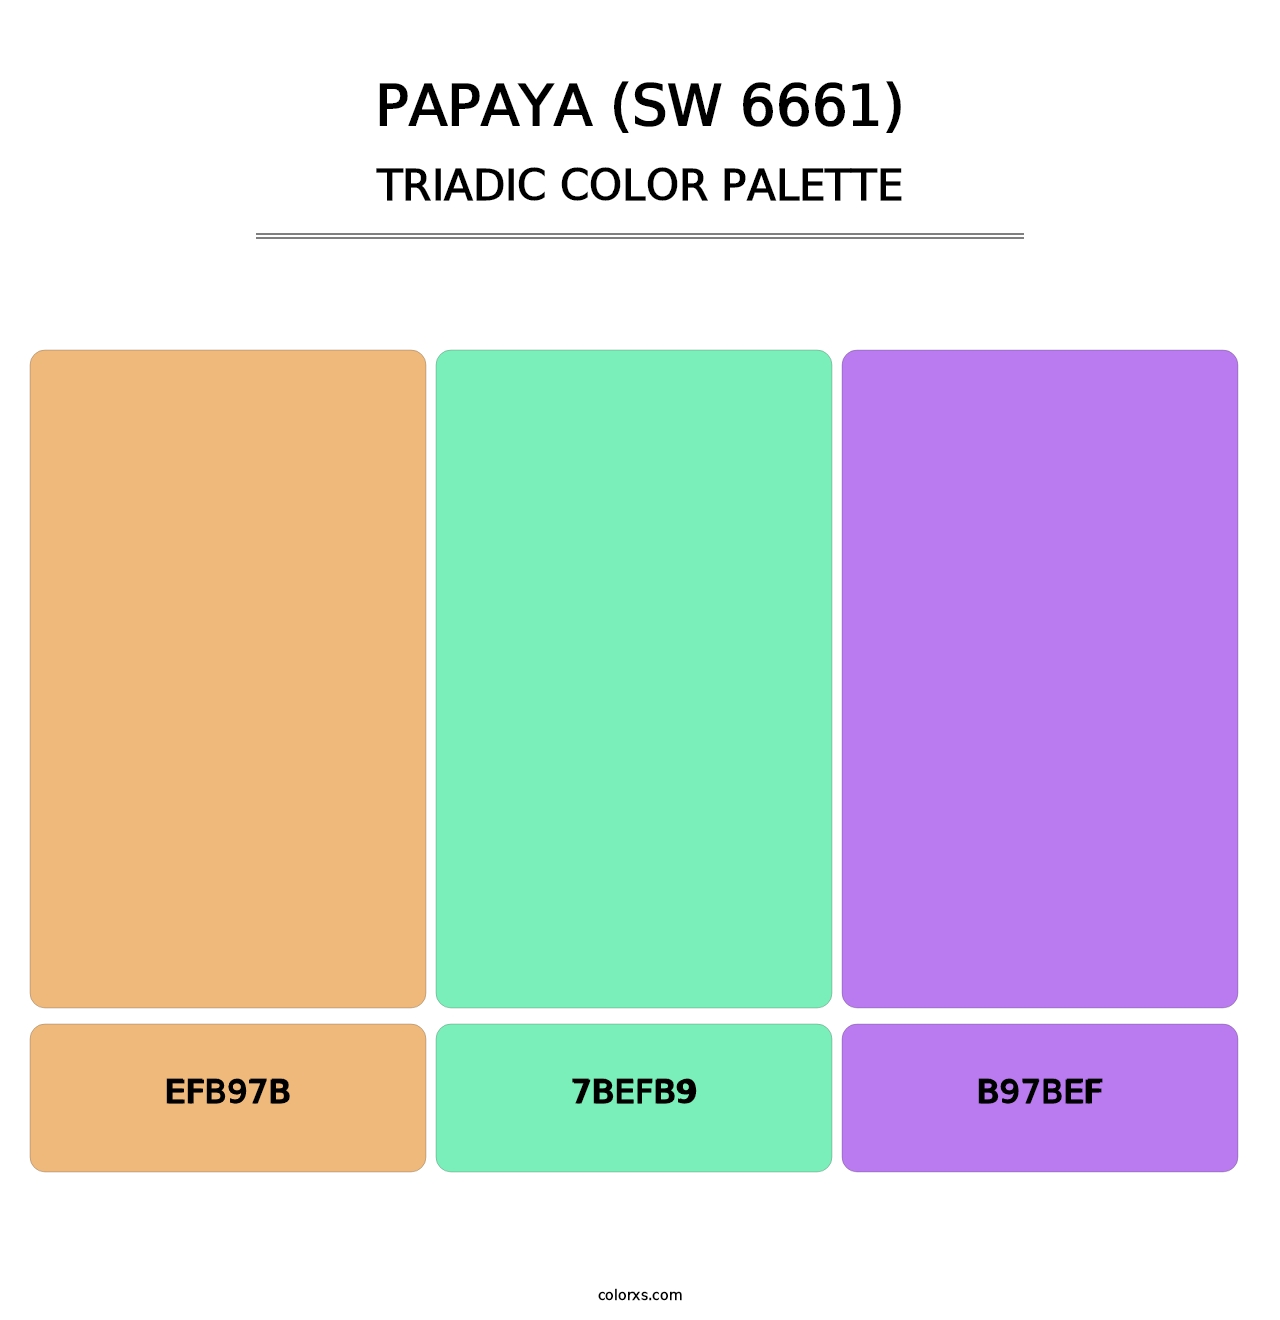 Papaya (SW 6661) - Triadic Color Palette